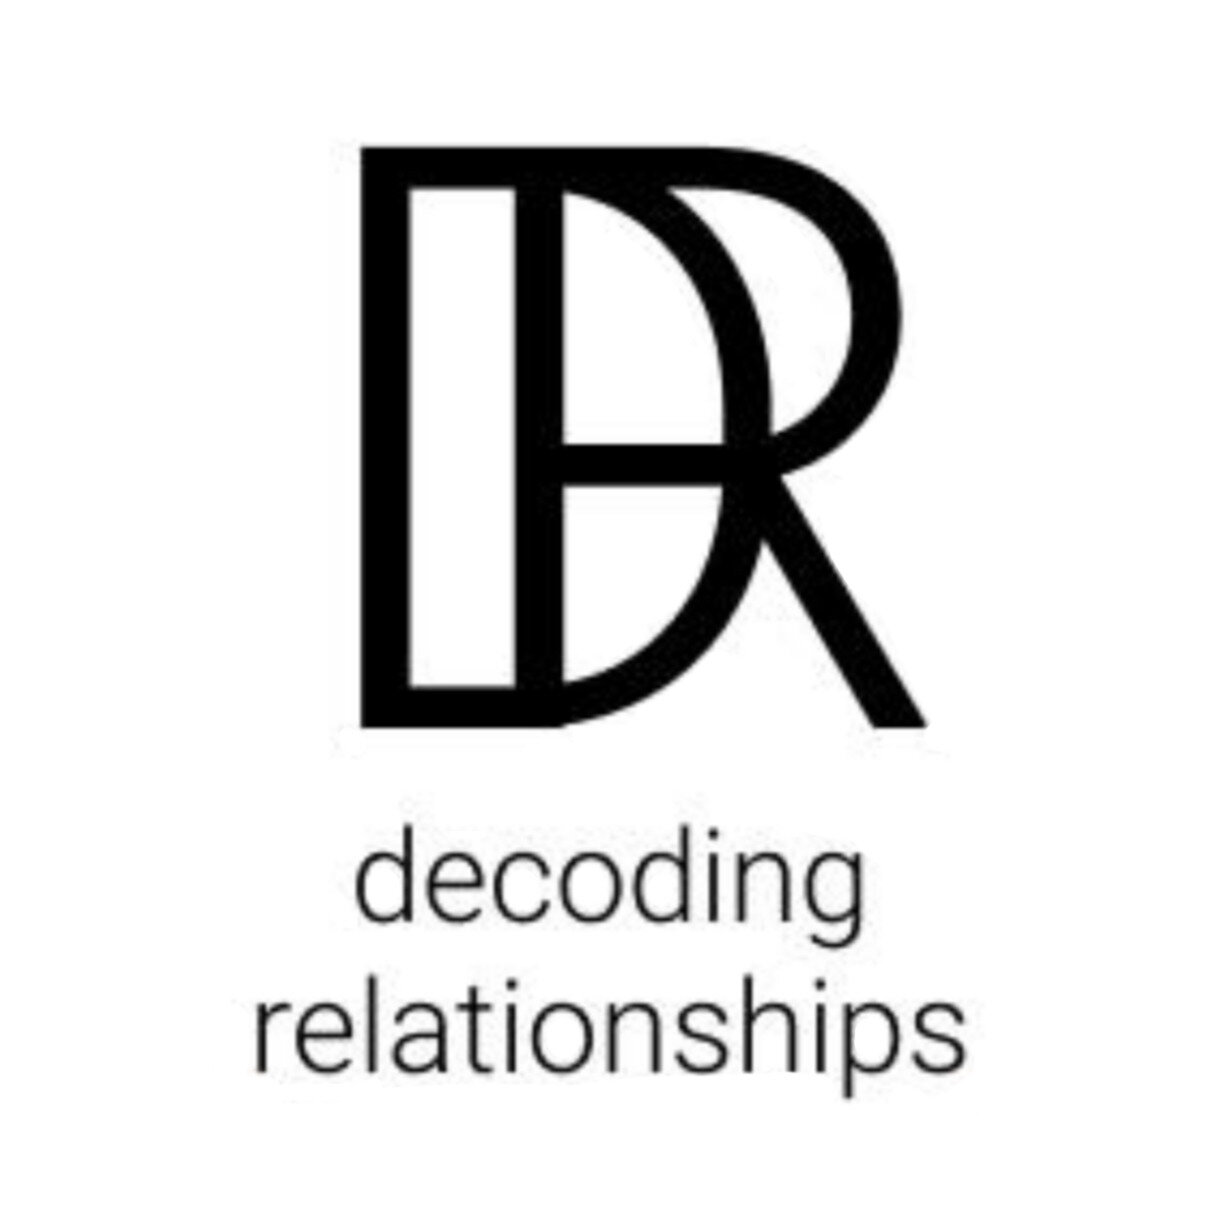 Decoding Relationships by Jennifer Parrella